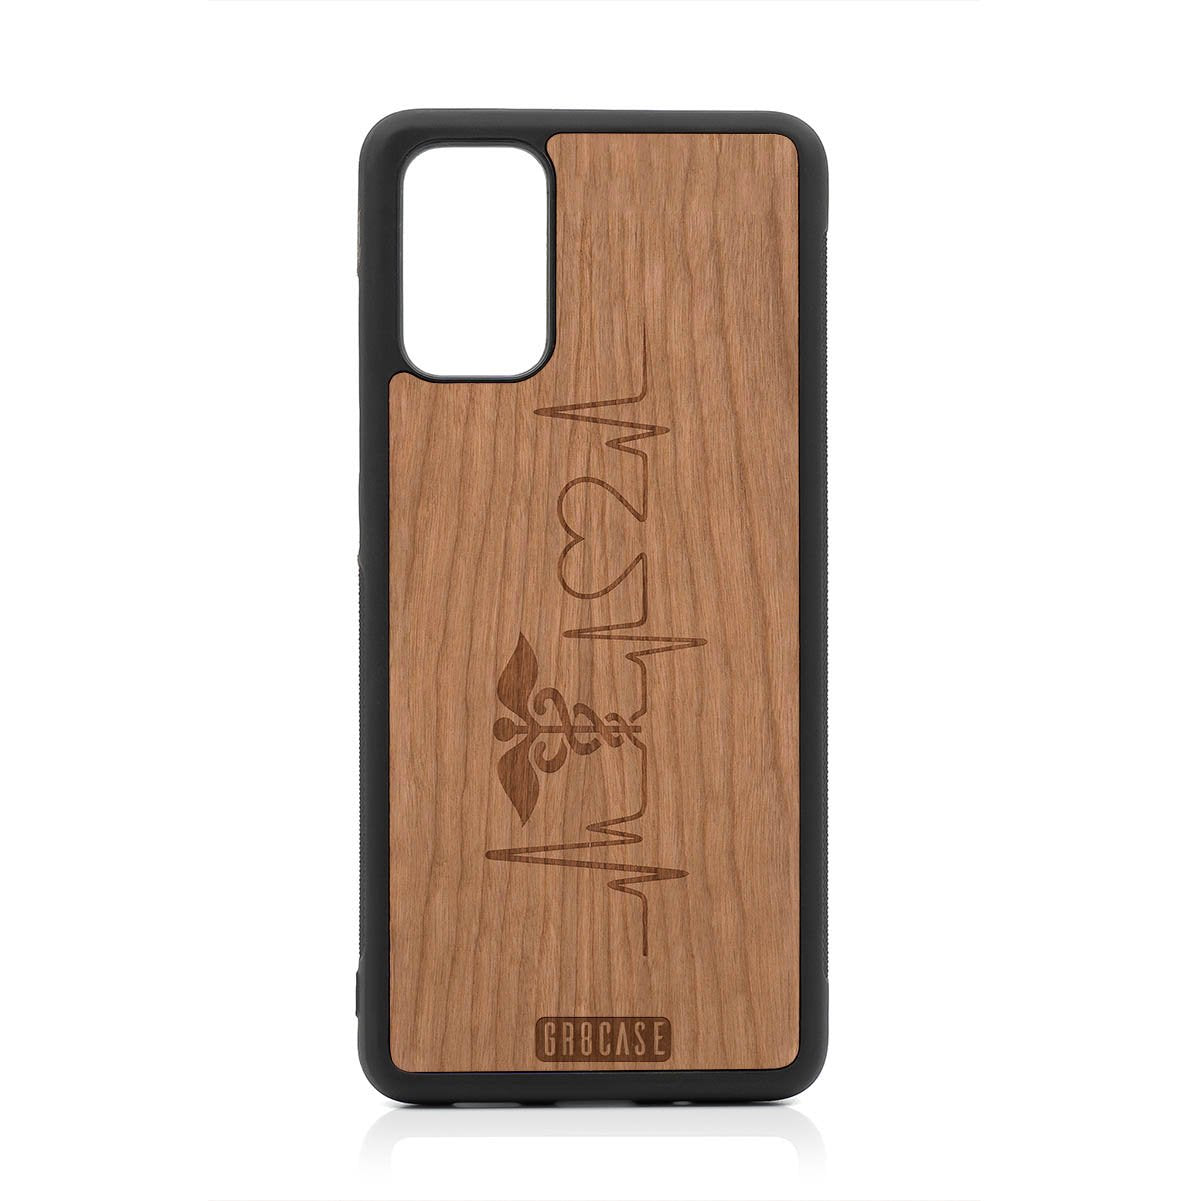 Hero's Heart (Nurse, Doctor) Design Wood Case For Samsung Galaxy S20 Plus by GR8CASE